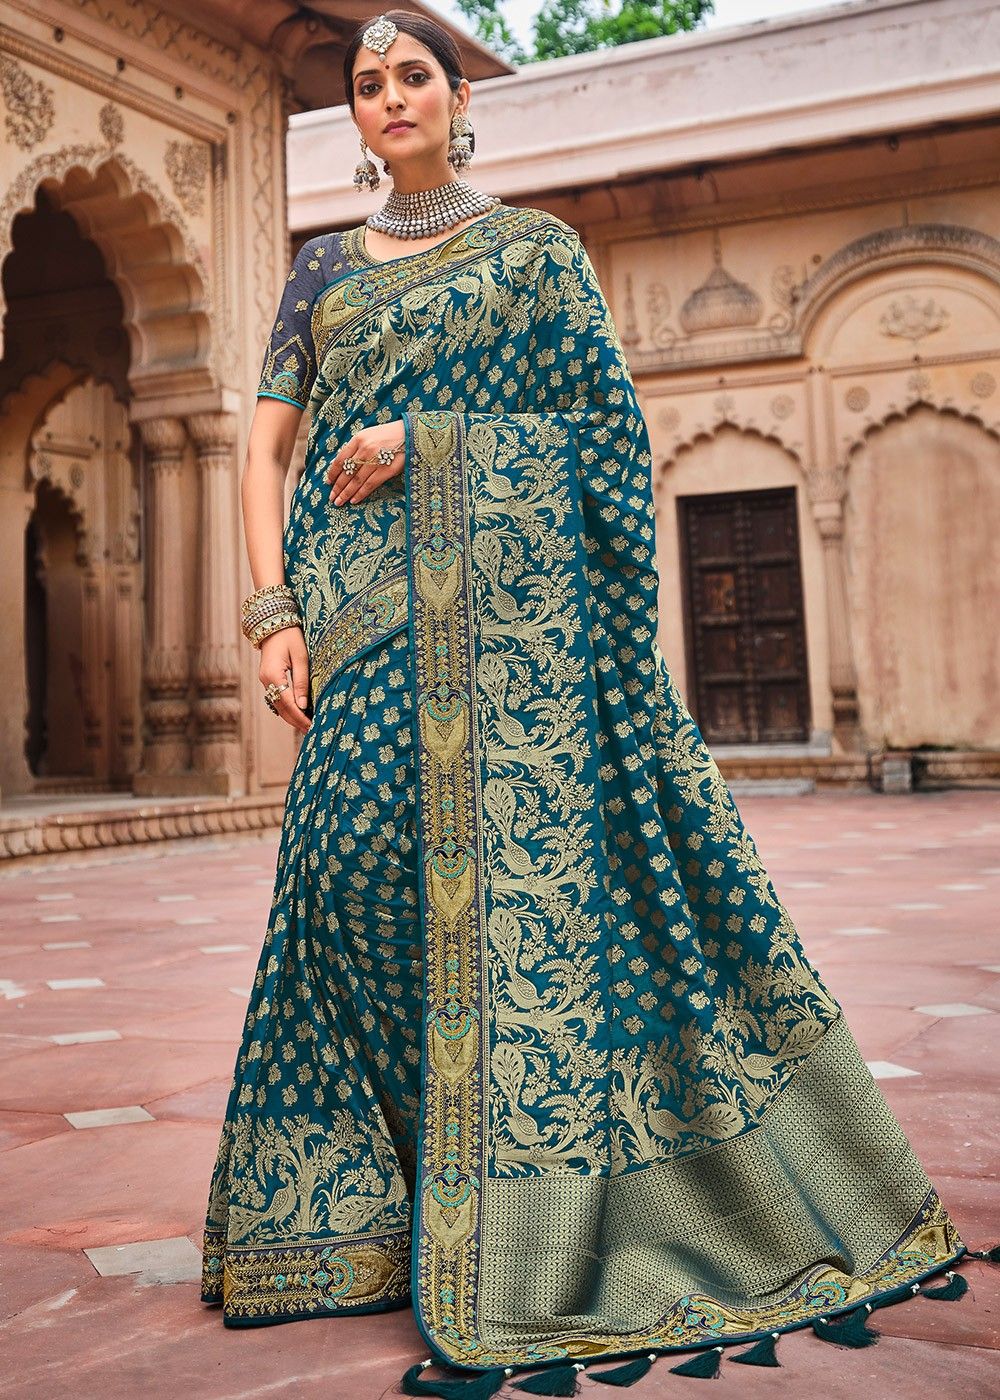 activitate a suge Senat  Blue Banarasi Saree With Heavy Embroidered Blouse Latest 4005SR09